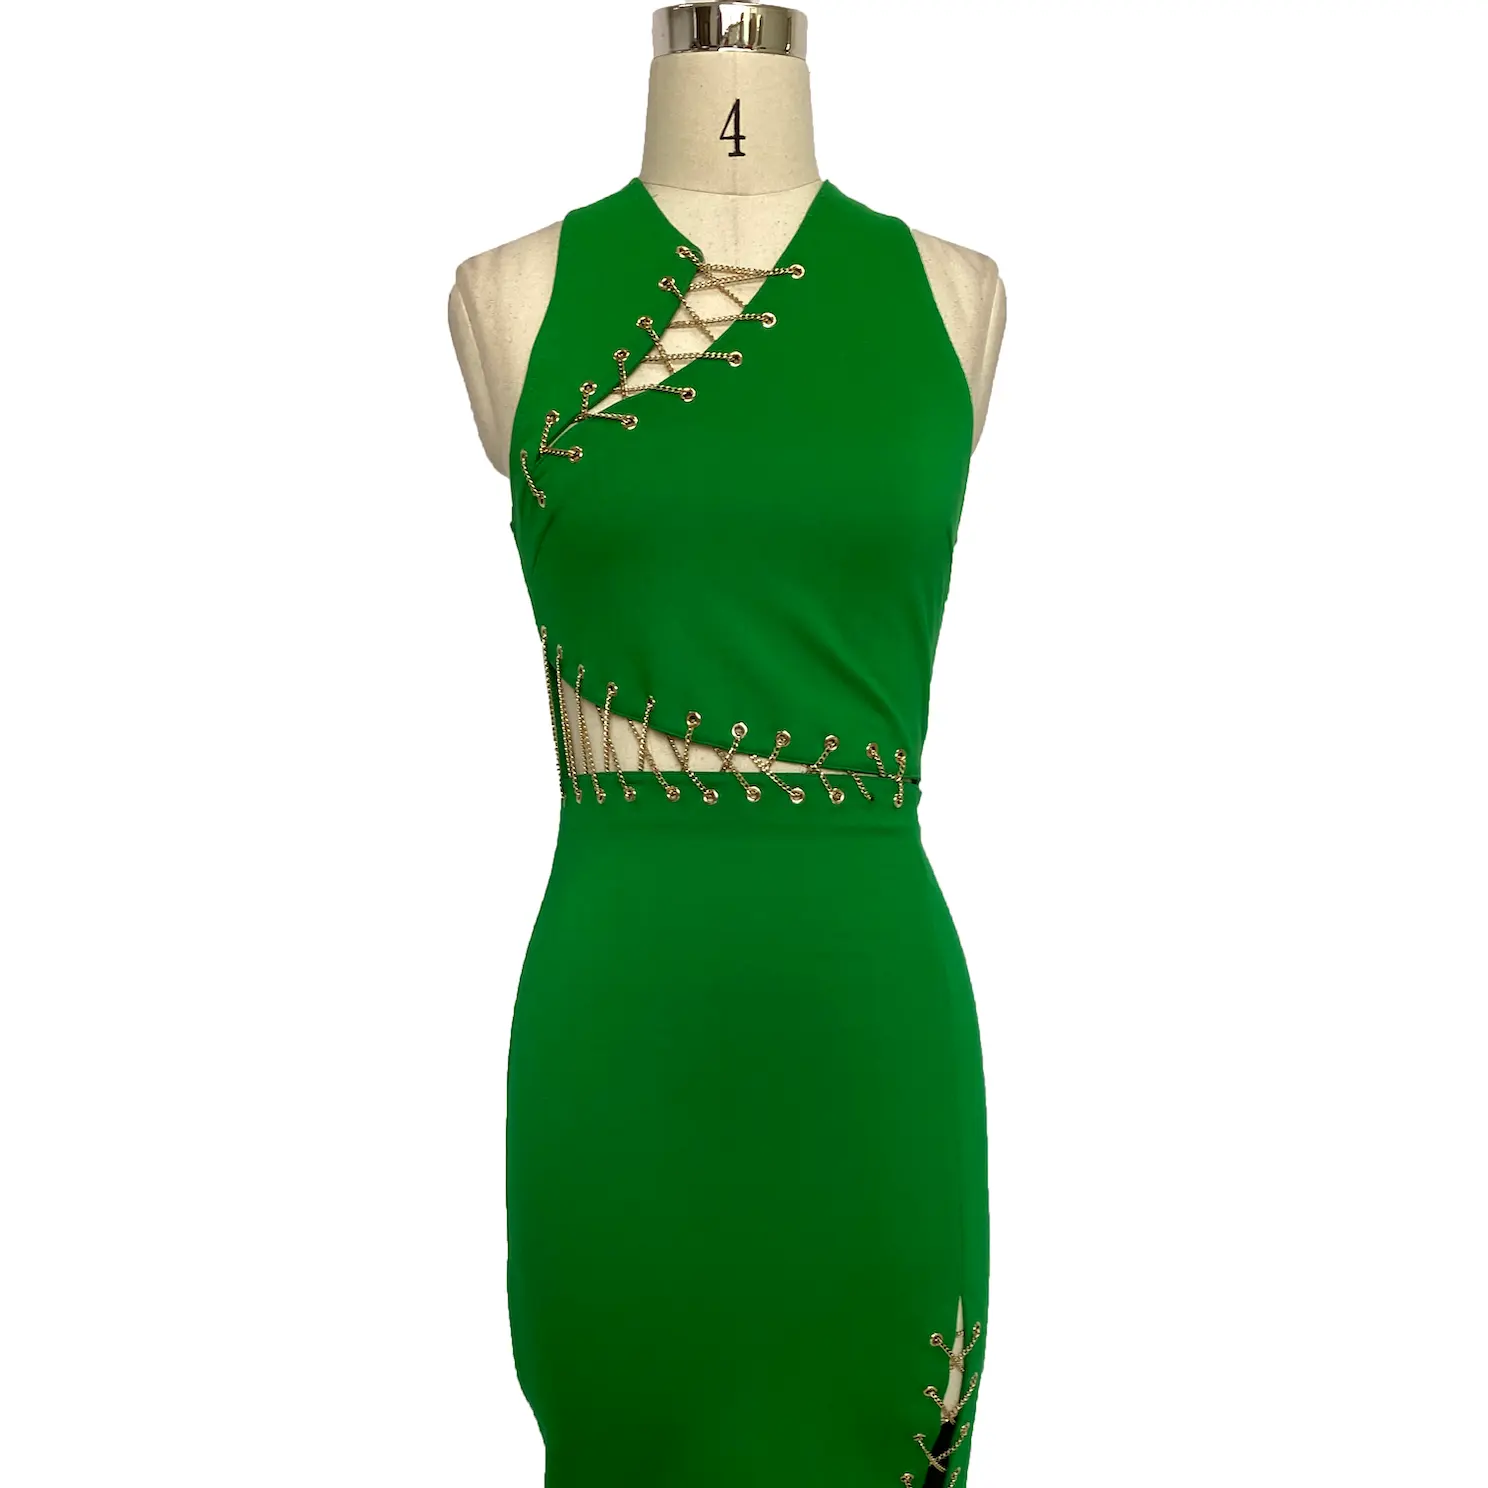 New women's leisure summer skirts ladies's fashion green evening dress gold chain waist skirt belt fish tail dress